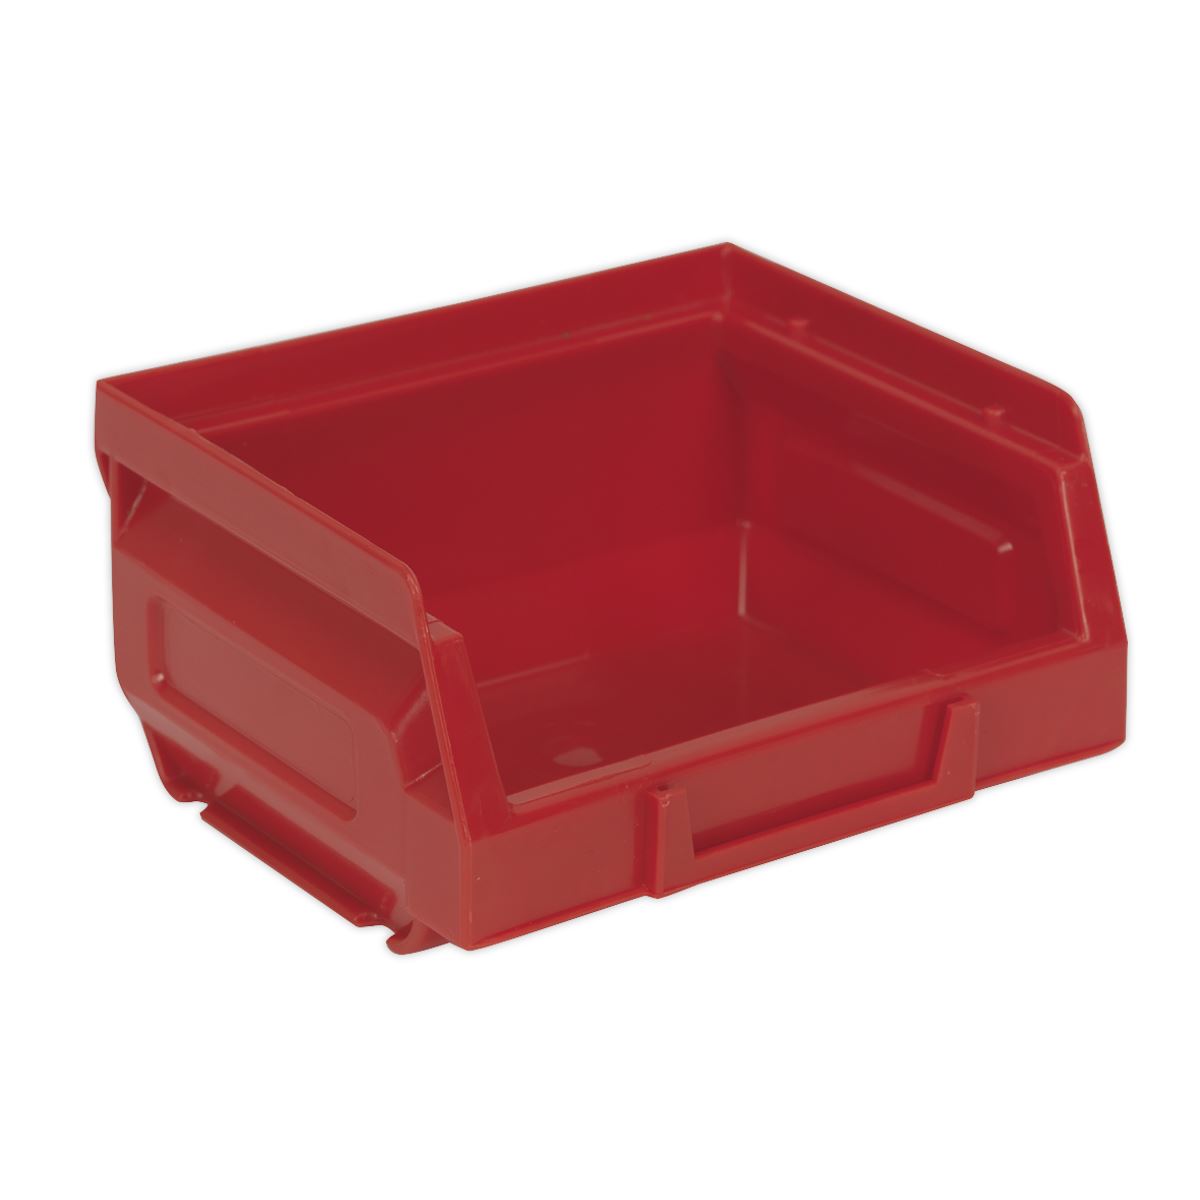 Sealey Plastic Storage Bin 105 x 85 x 55mm - Red Pack of 24